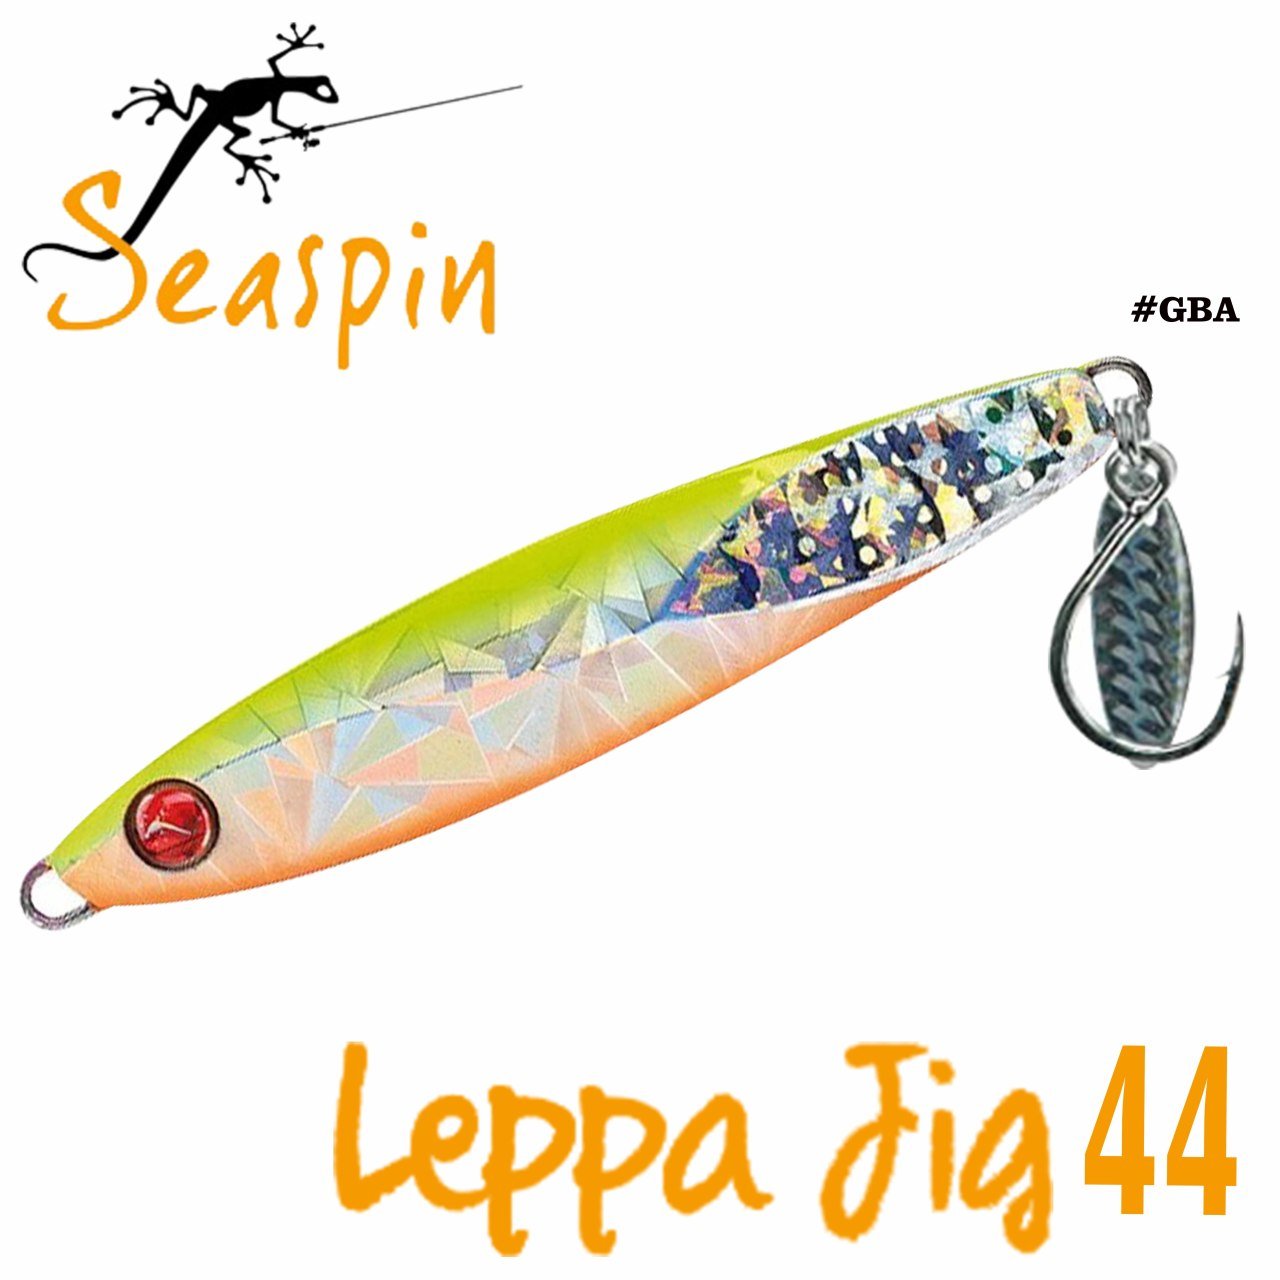 Seaspin Leppa 44gr jig yem #GBA